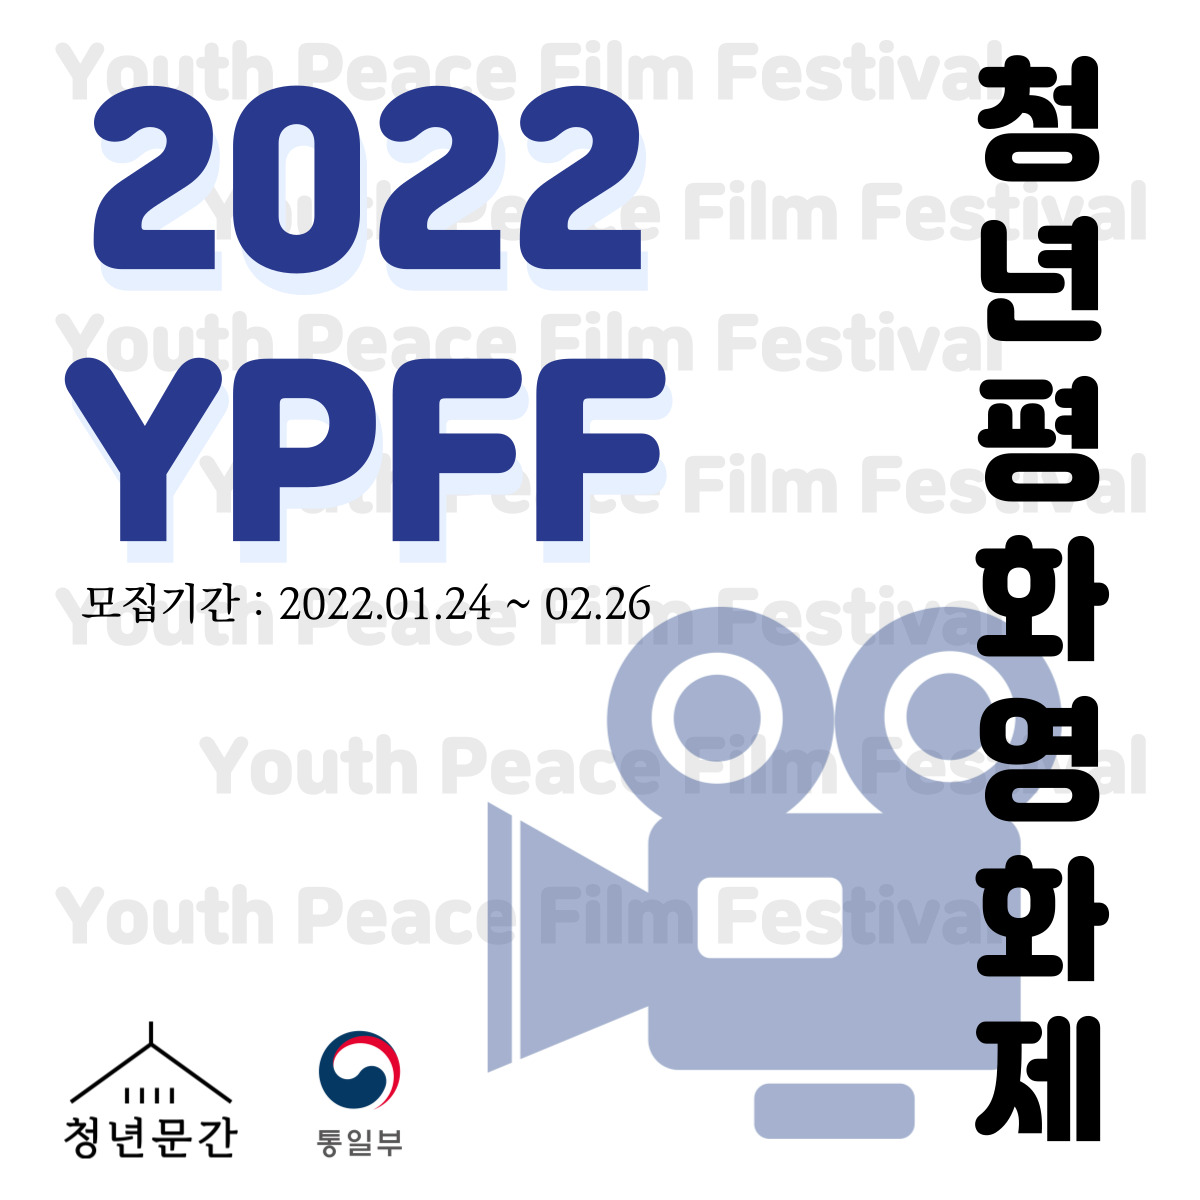 YPFF 청년평화영화제